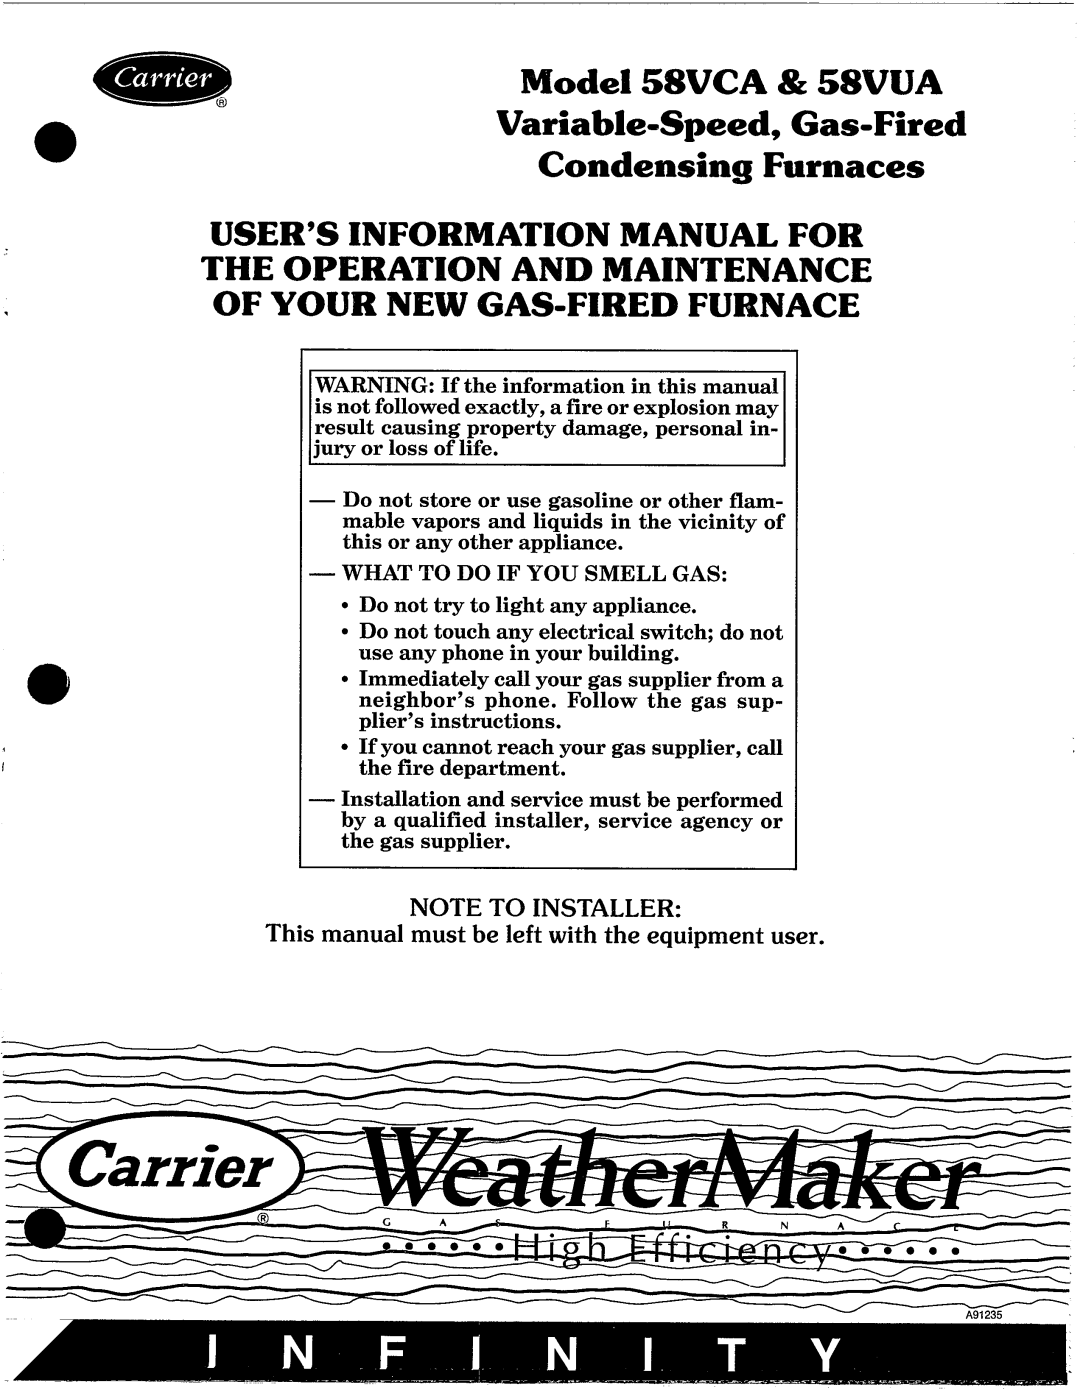 Carrier 58VCA, 58VUA manual 